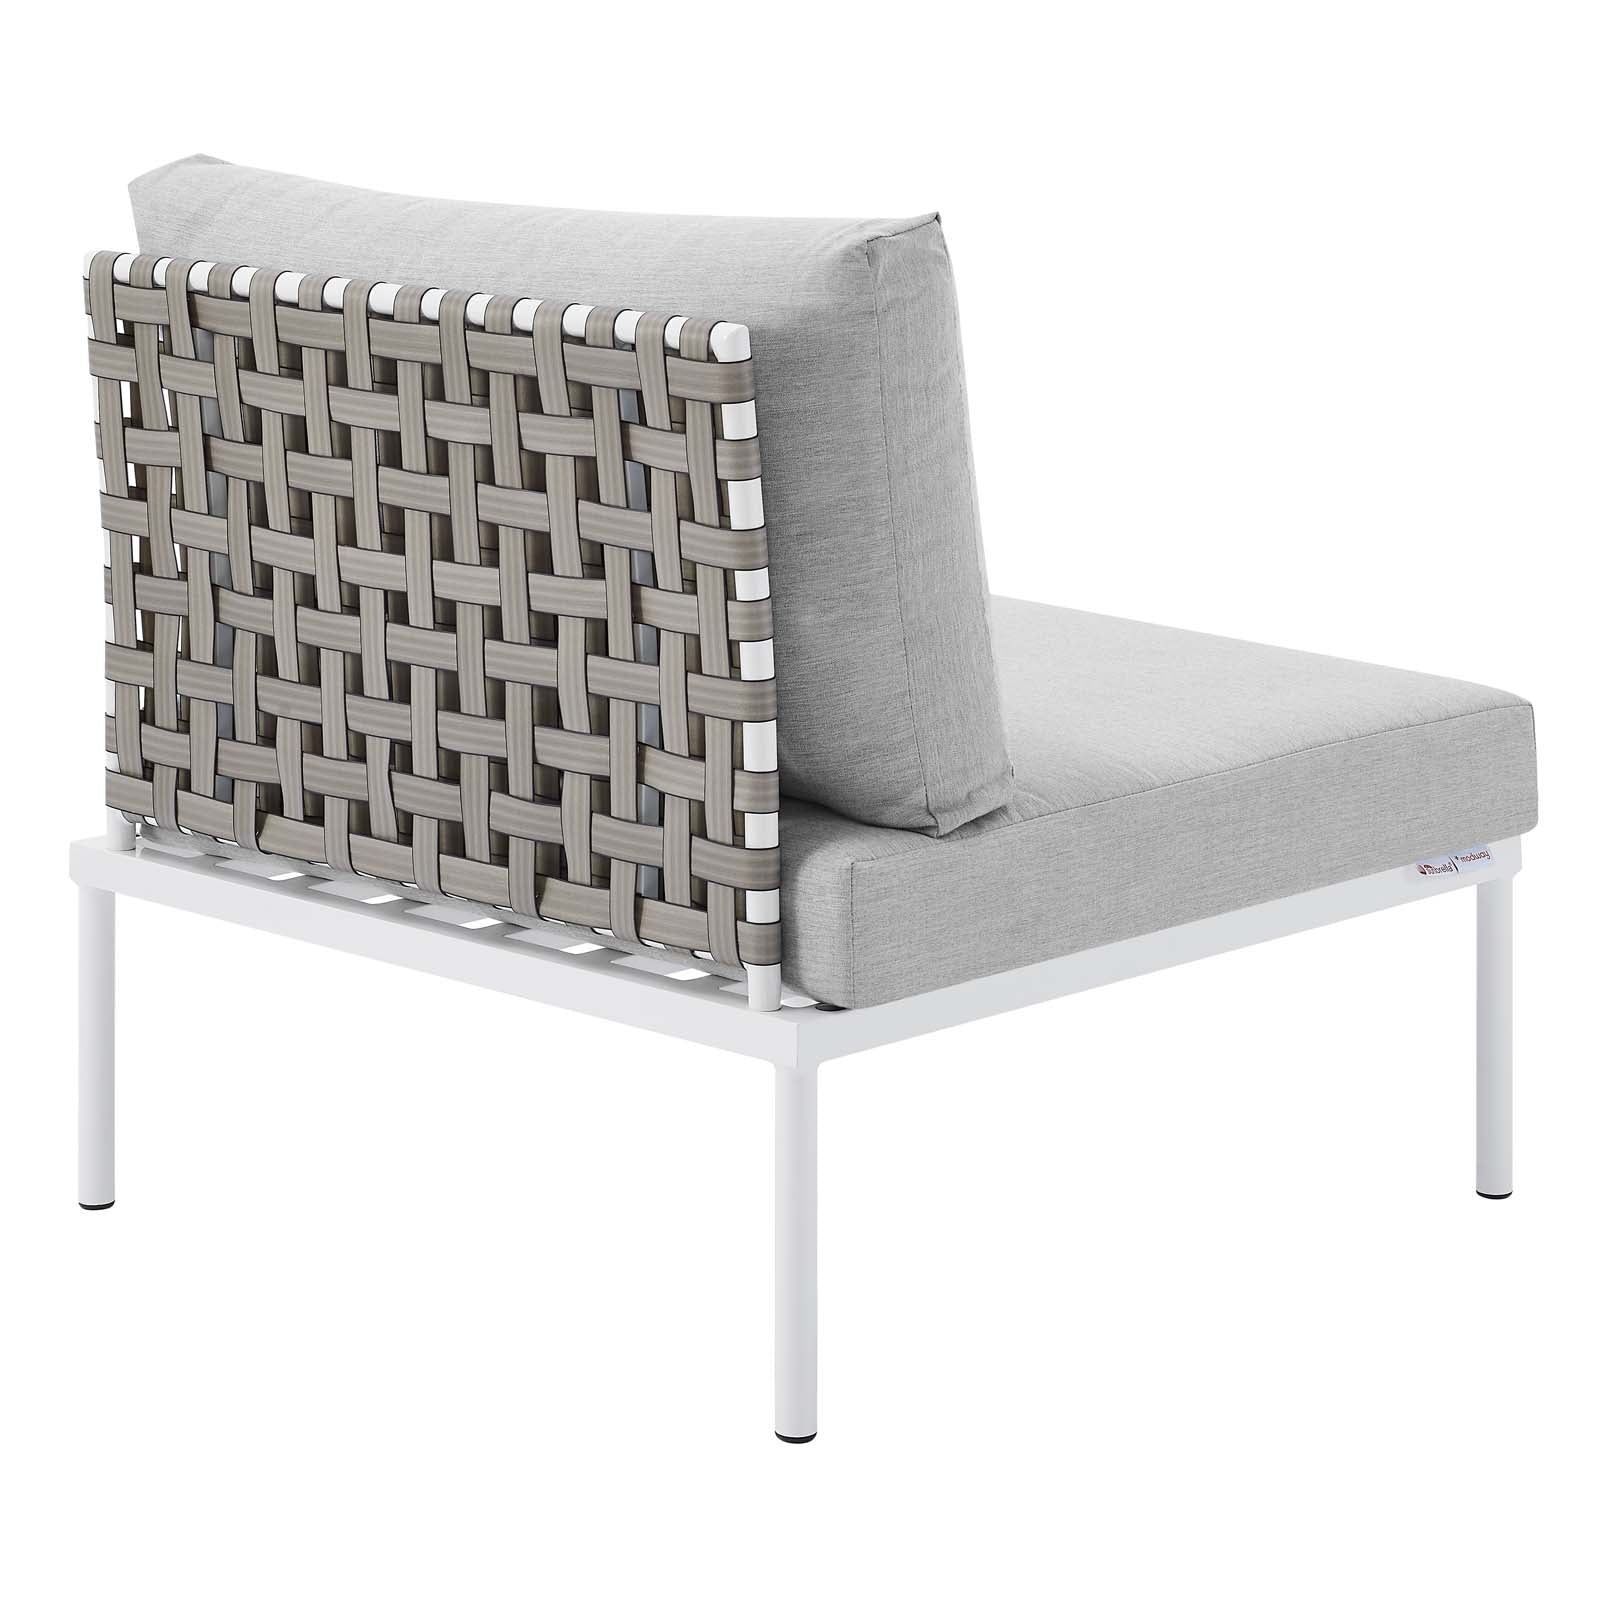 Modway Outdoor Chairs - Harmony Sunbrella Basket Weave Outdoor Patio Aluminum Armless Chair Tan Gray